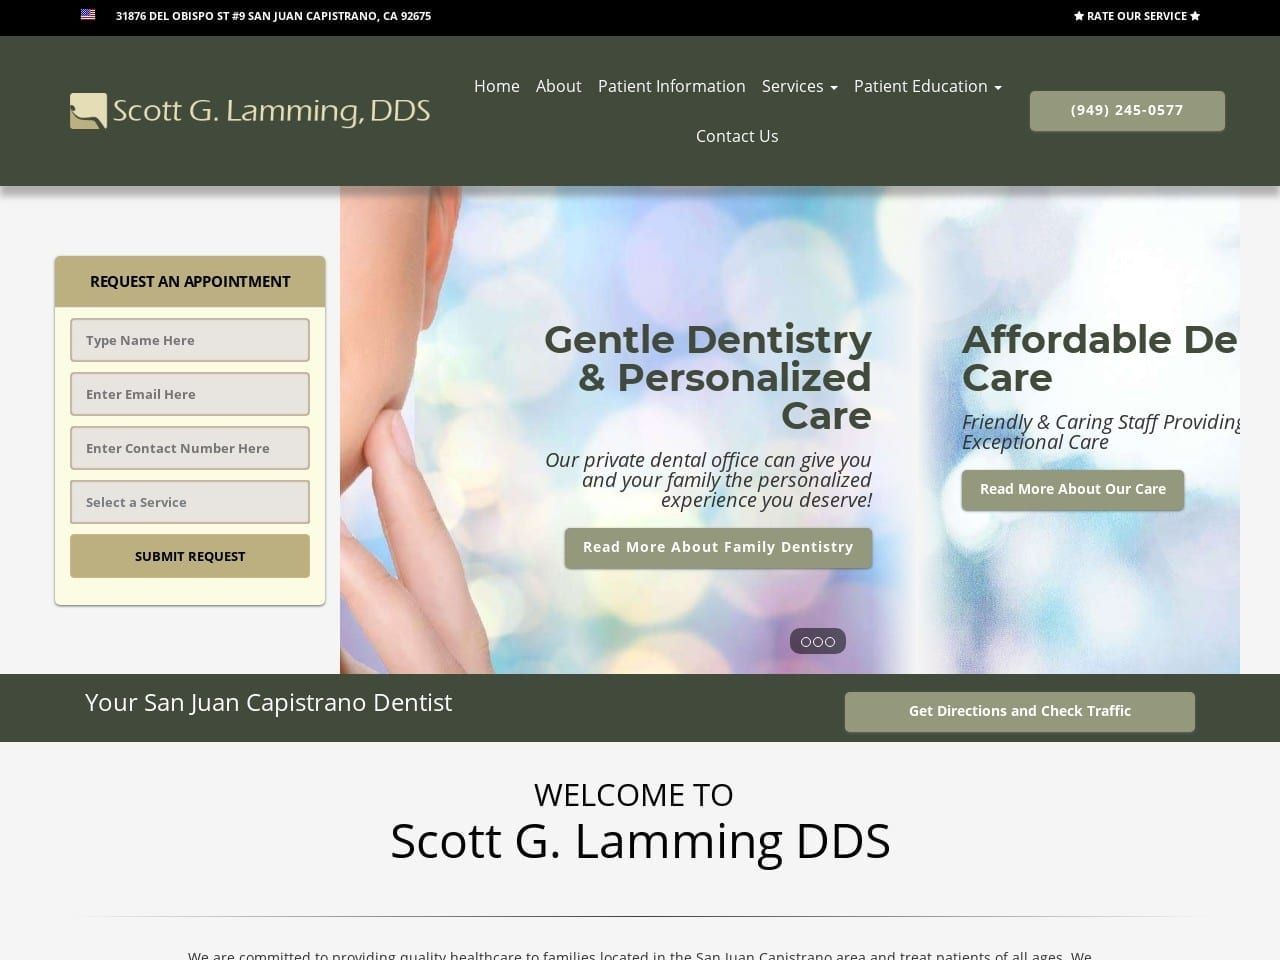 Dr Lamming Website Screenshot from drlamming.com